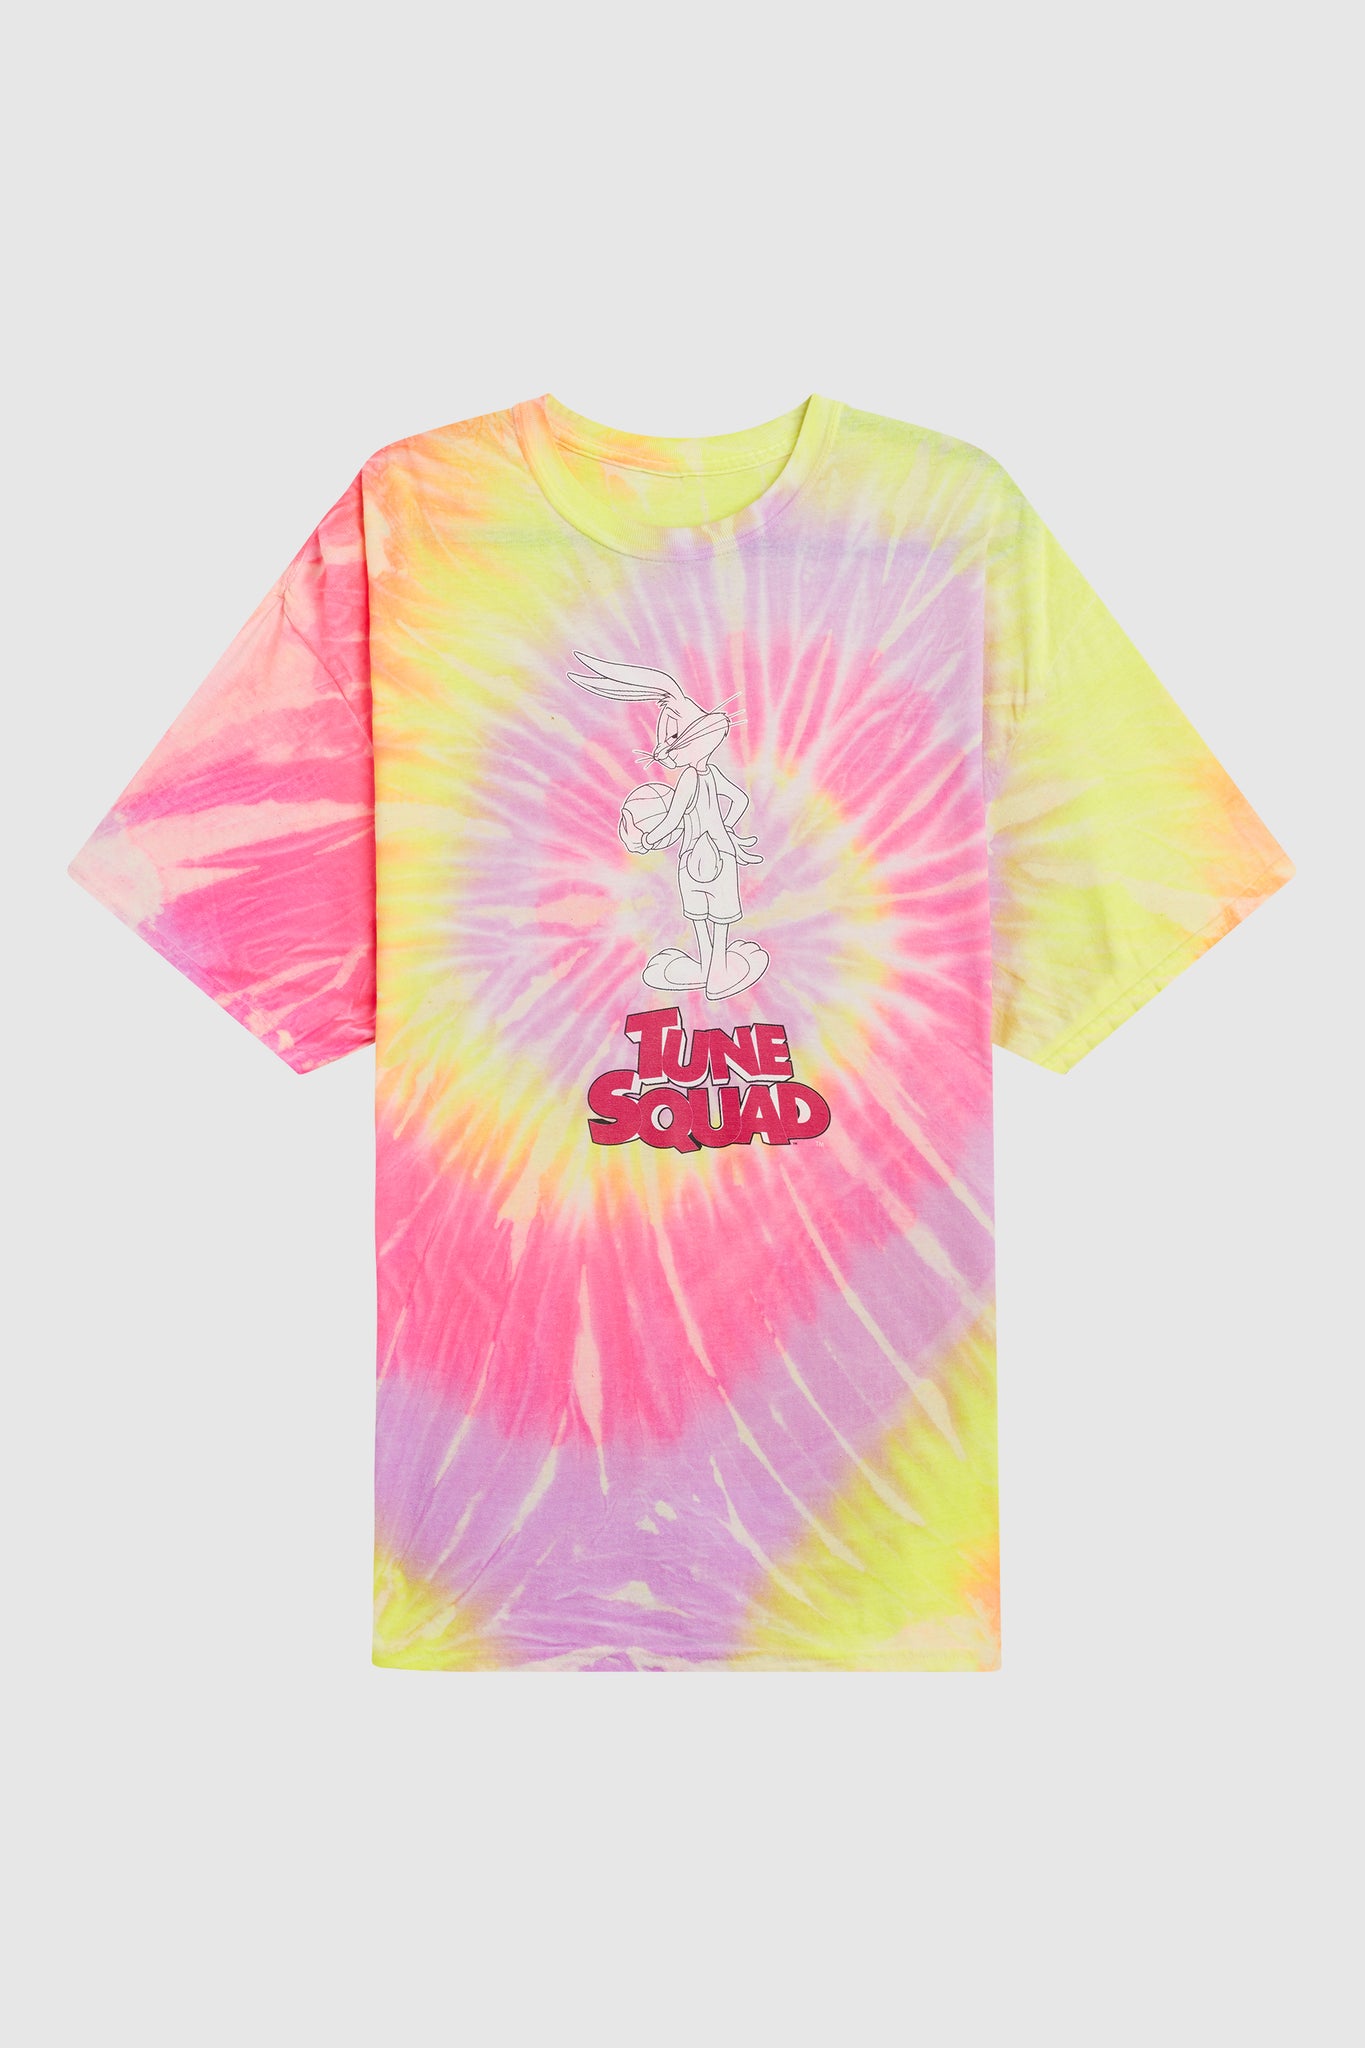 Dim Mak x Space Jam: A New Legacy - Tune Squad Tshirt - Grapefruit Spiral Tie Dye